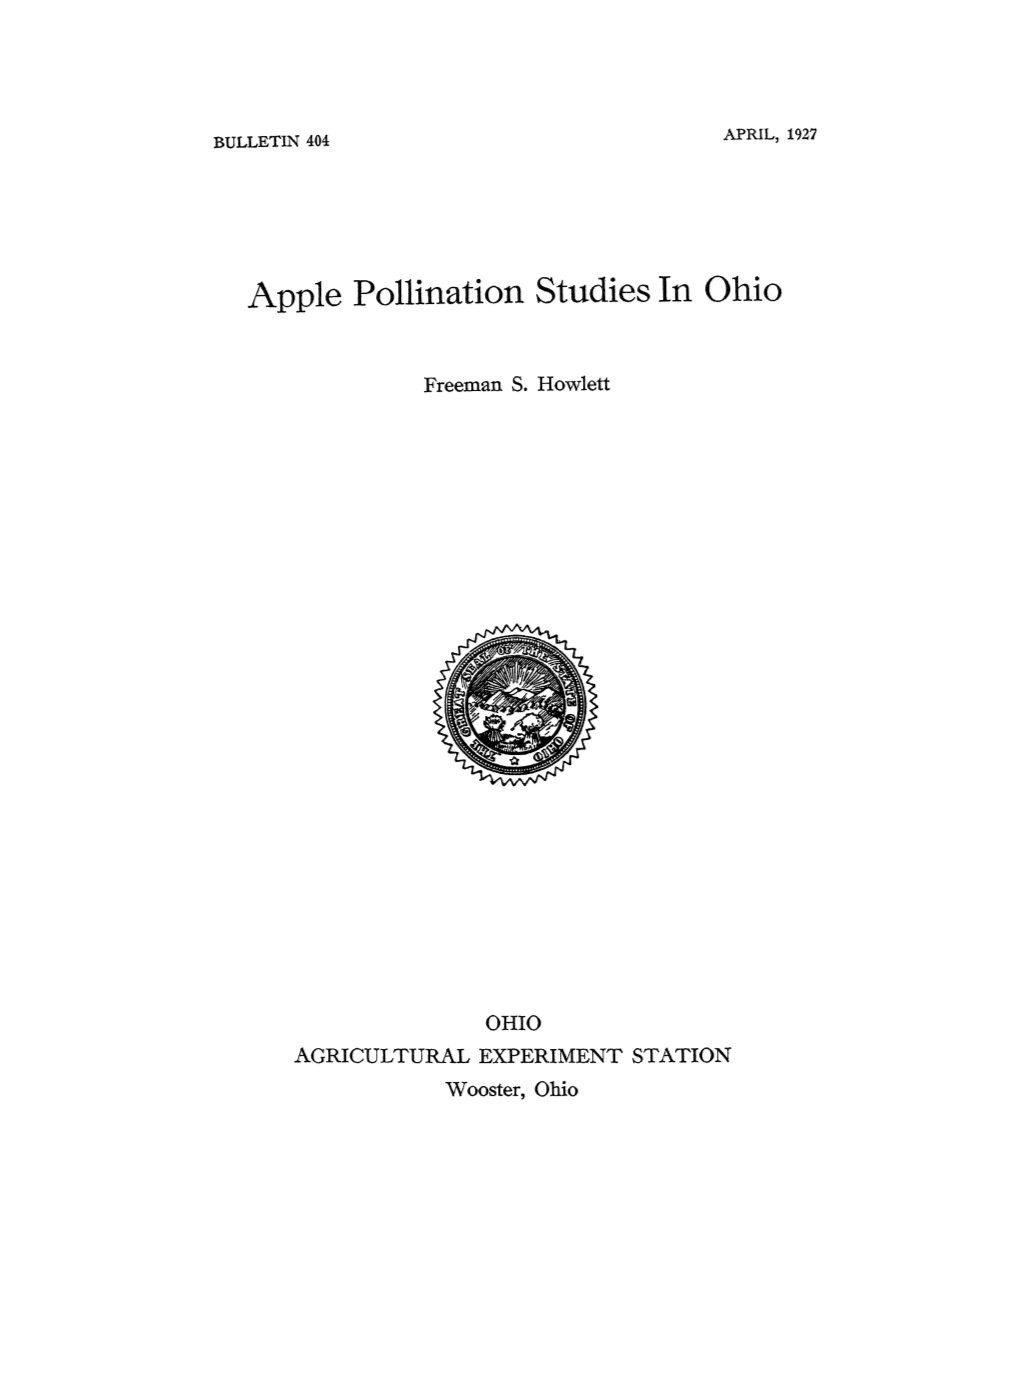 Apple Pollination Studies in Ohio